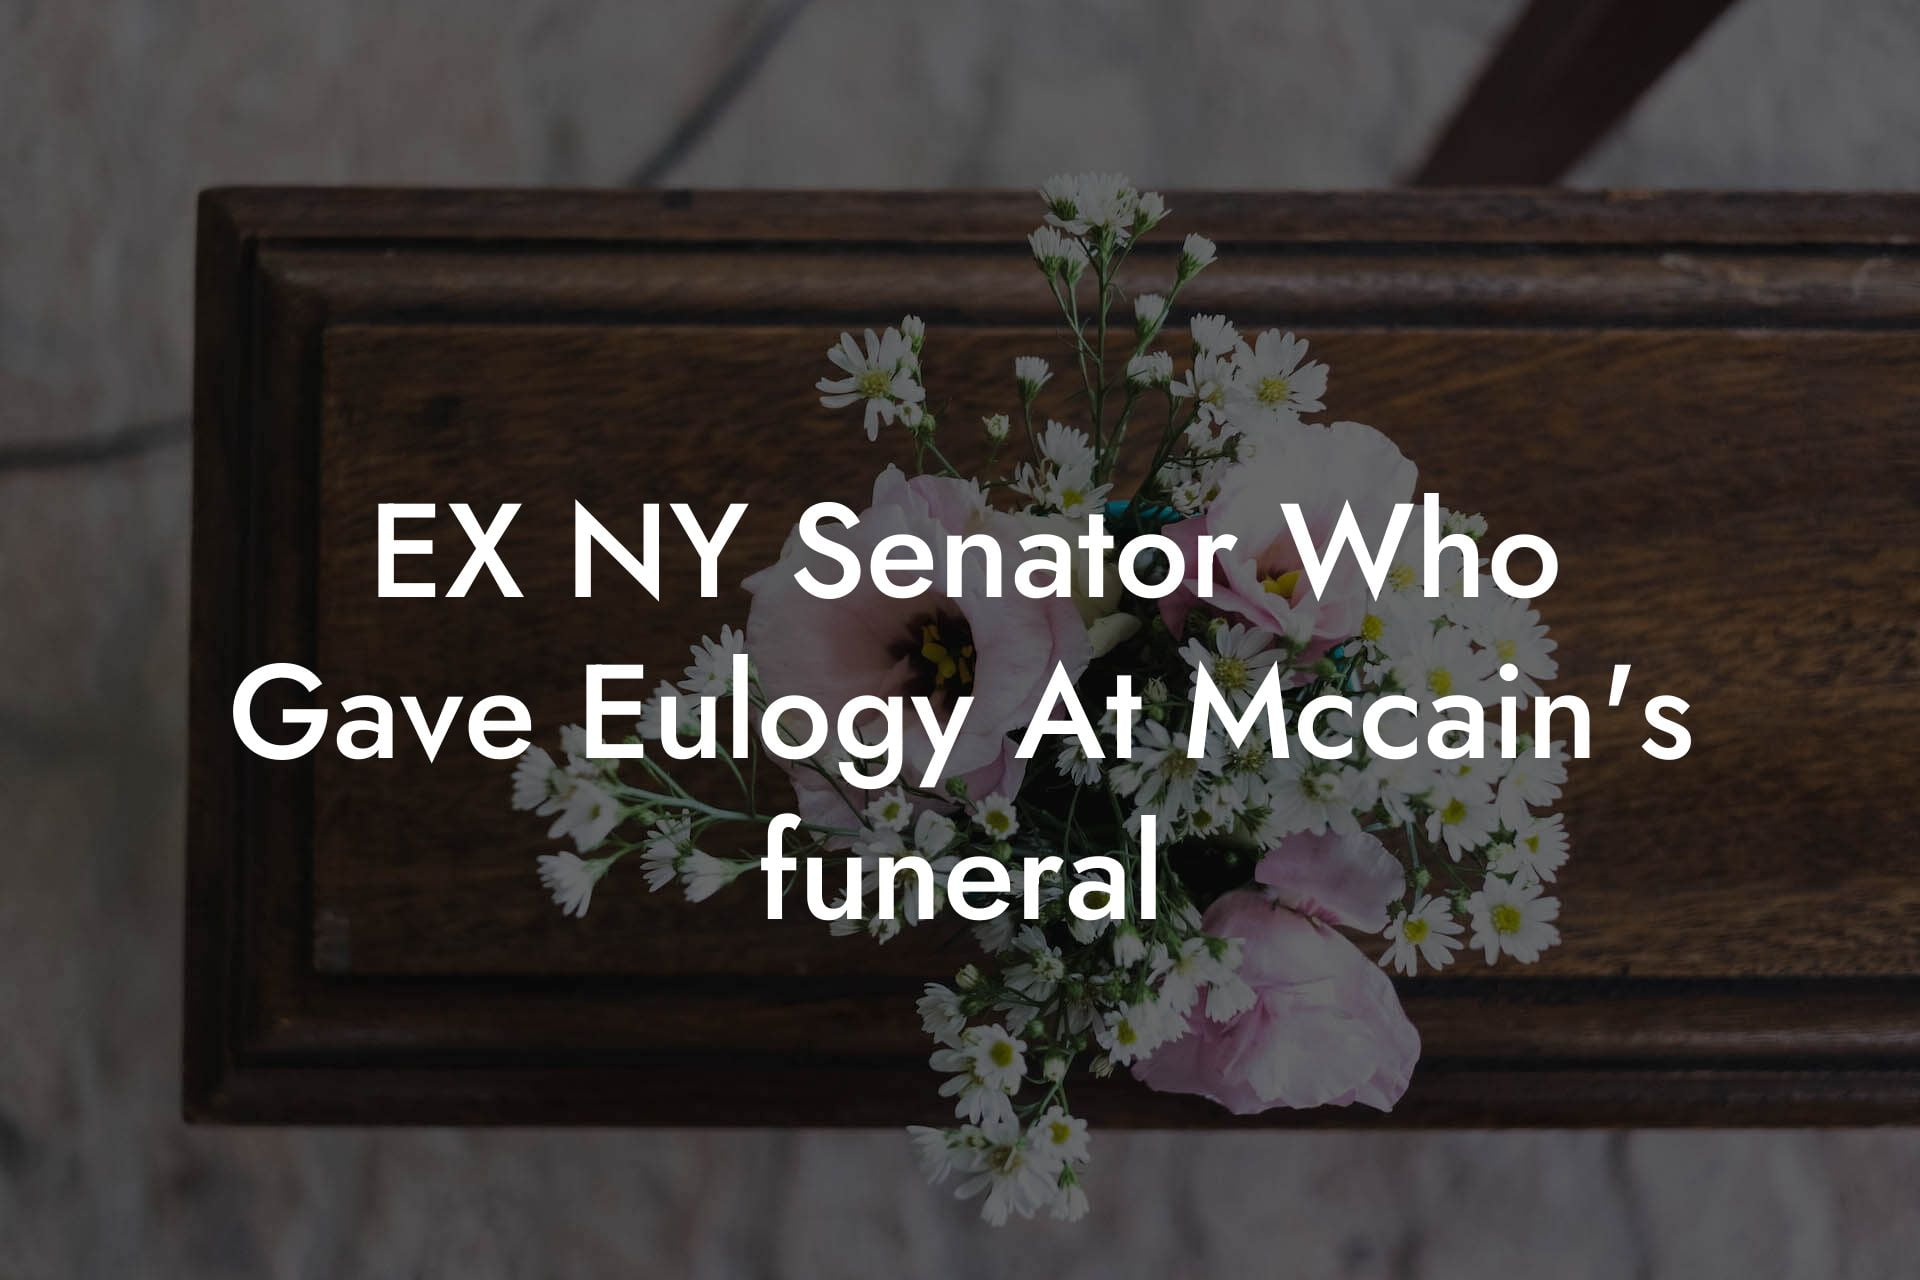 EX NY Senator Who Gave Eulogy At Mccain's funeral